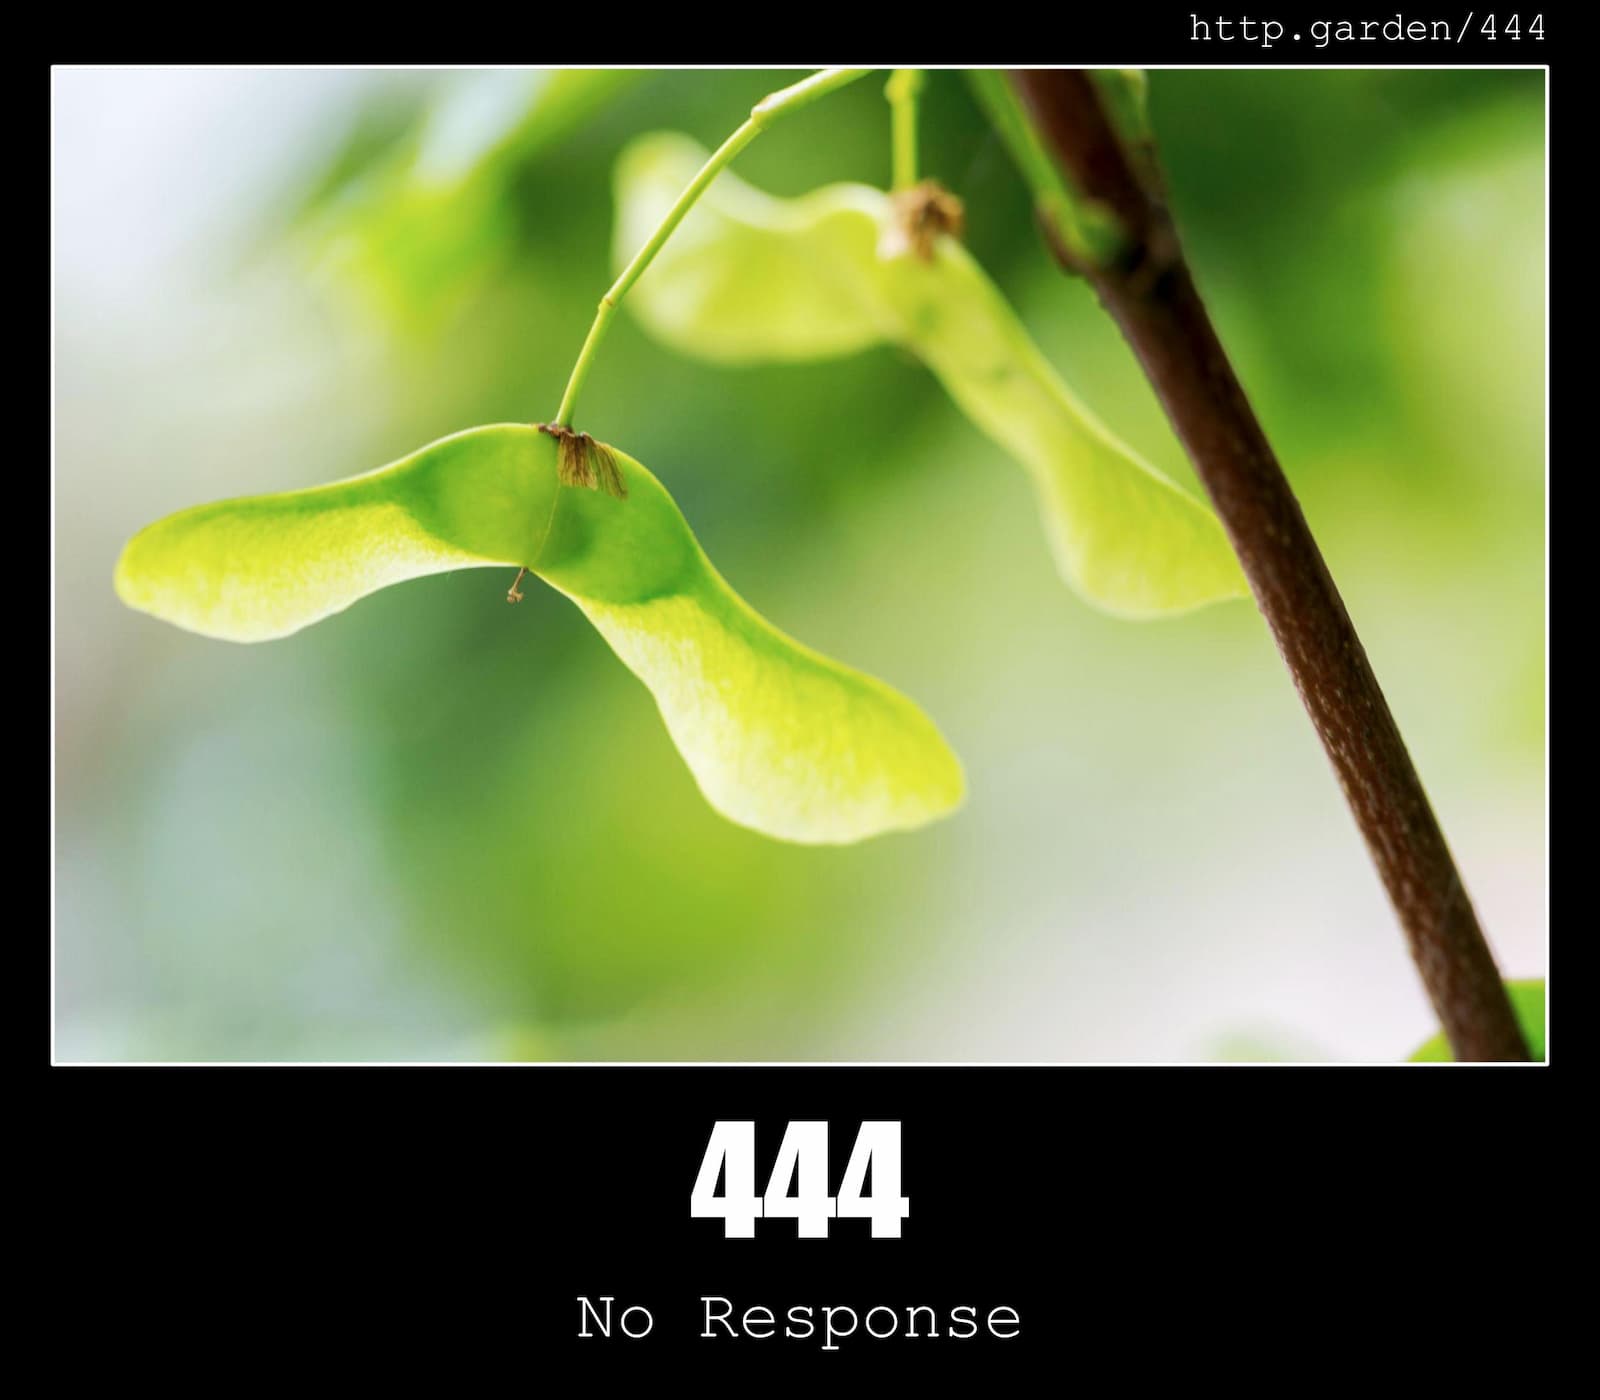 HTTP Status Code 444 No Response & Gardening